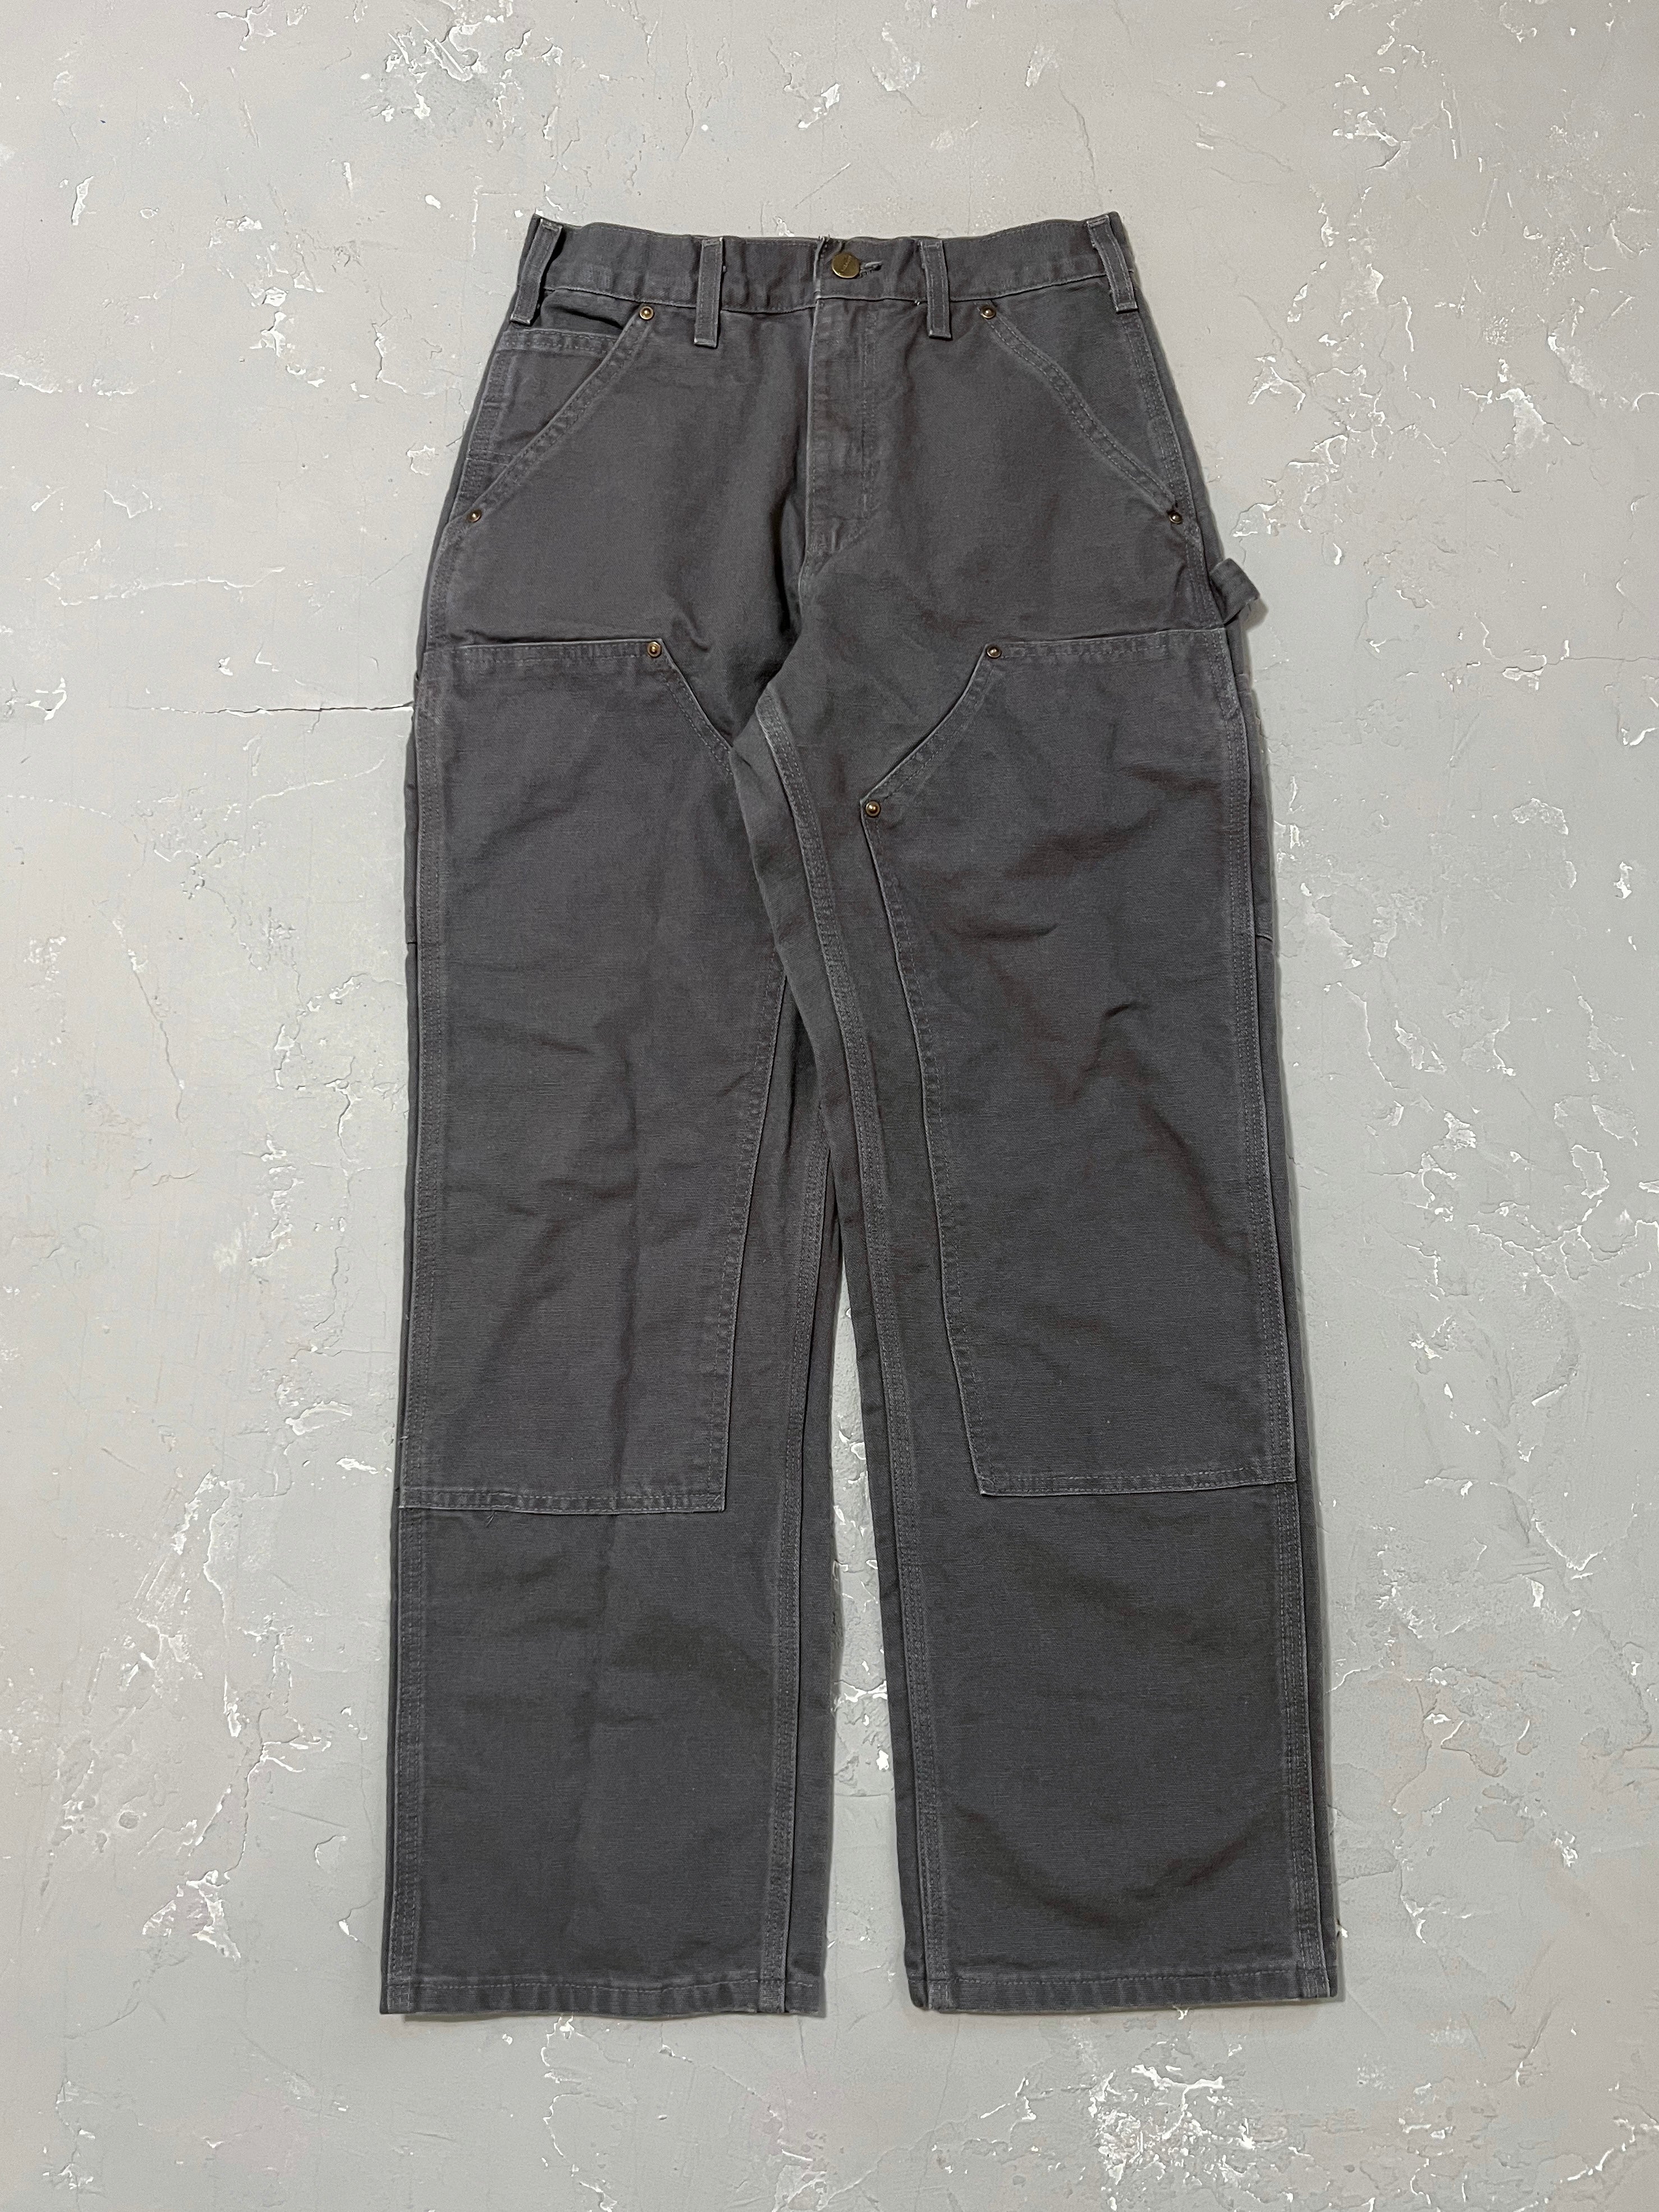 Carhartt Gray Double Knee Pants [28 x 30]